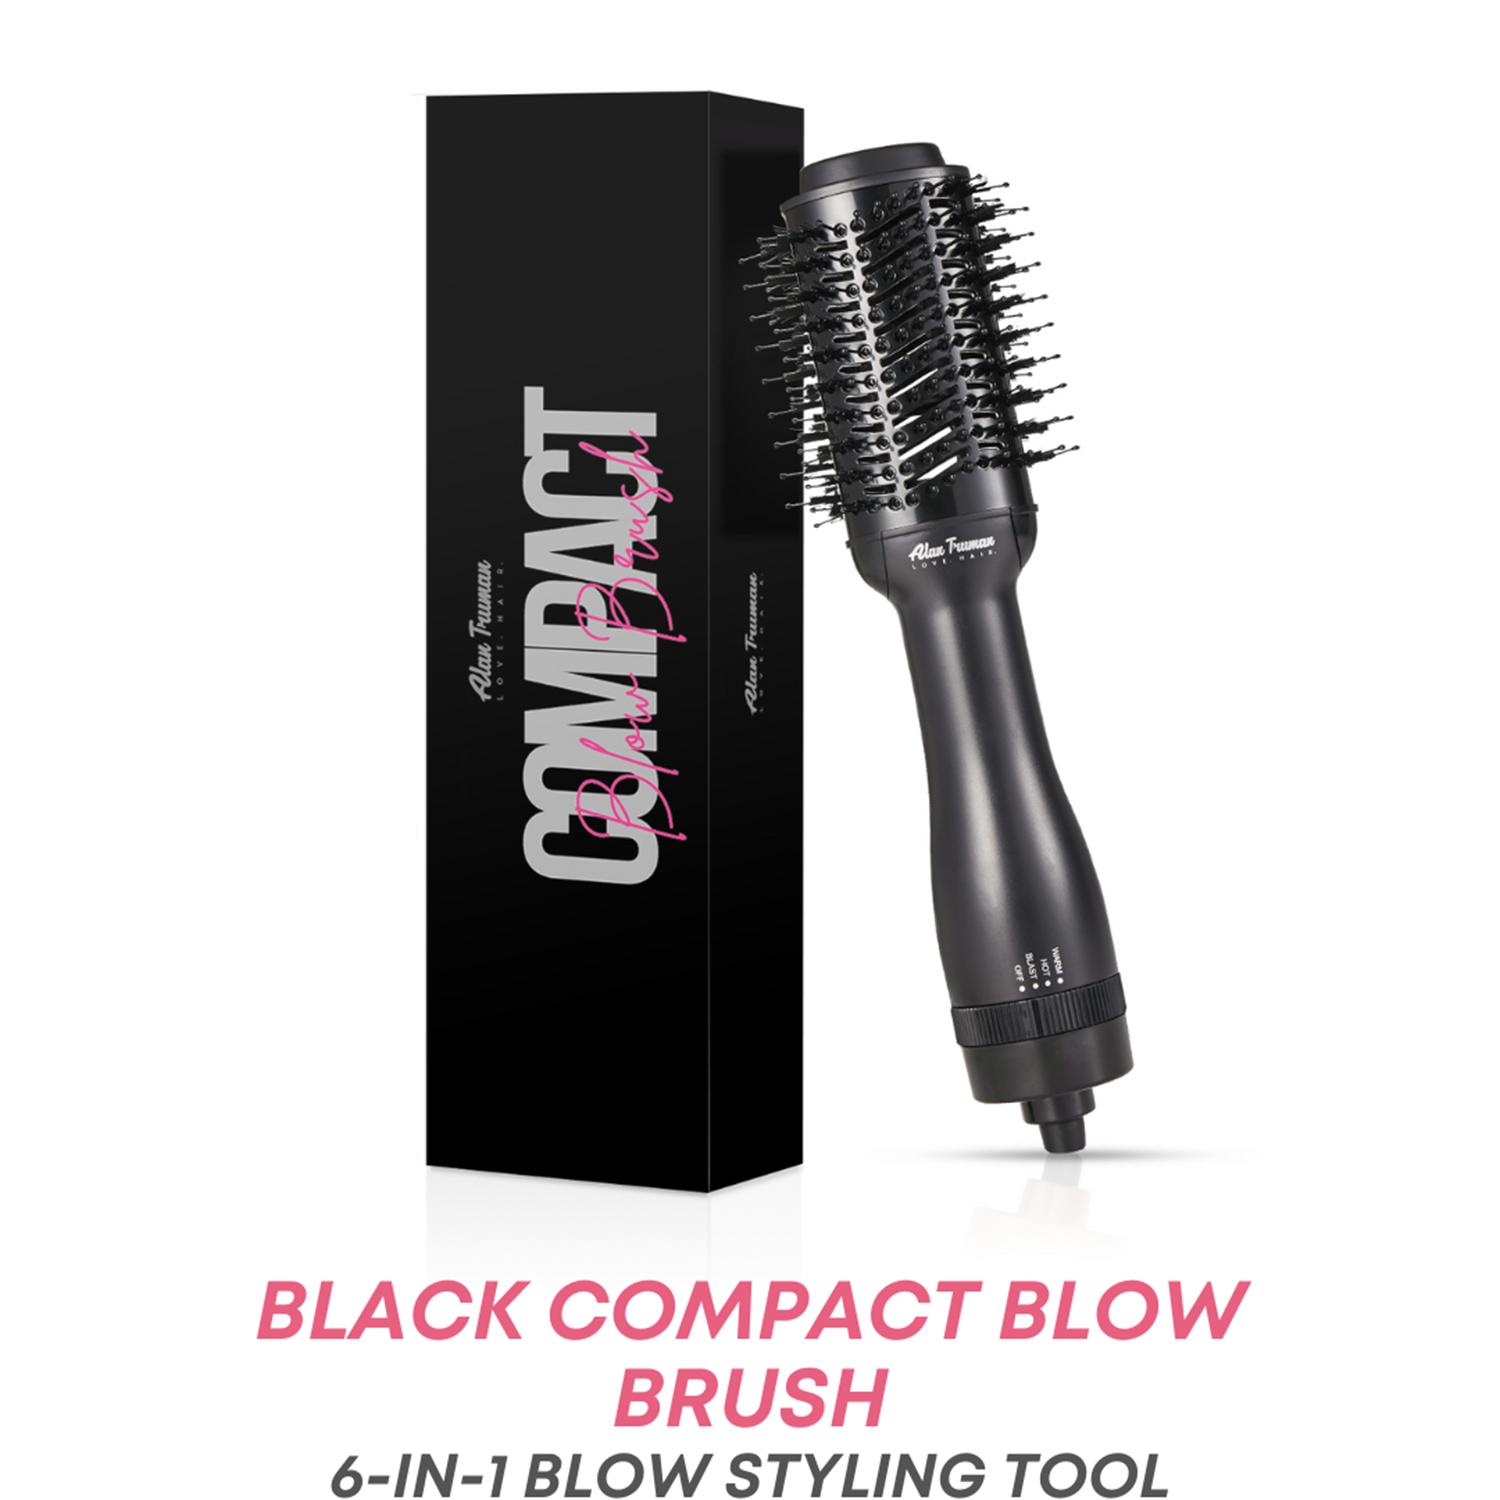 Alan Truman Compact Blow Brush - Black (1 Pc)